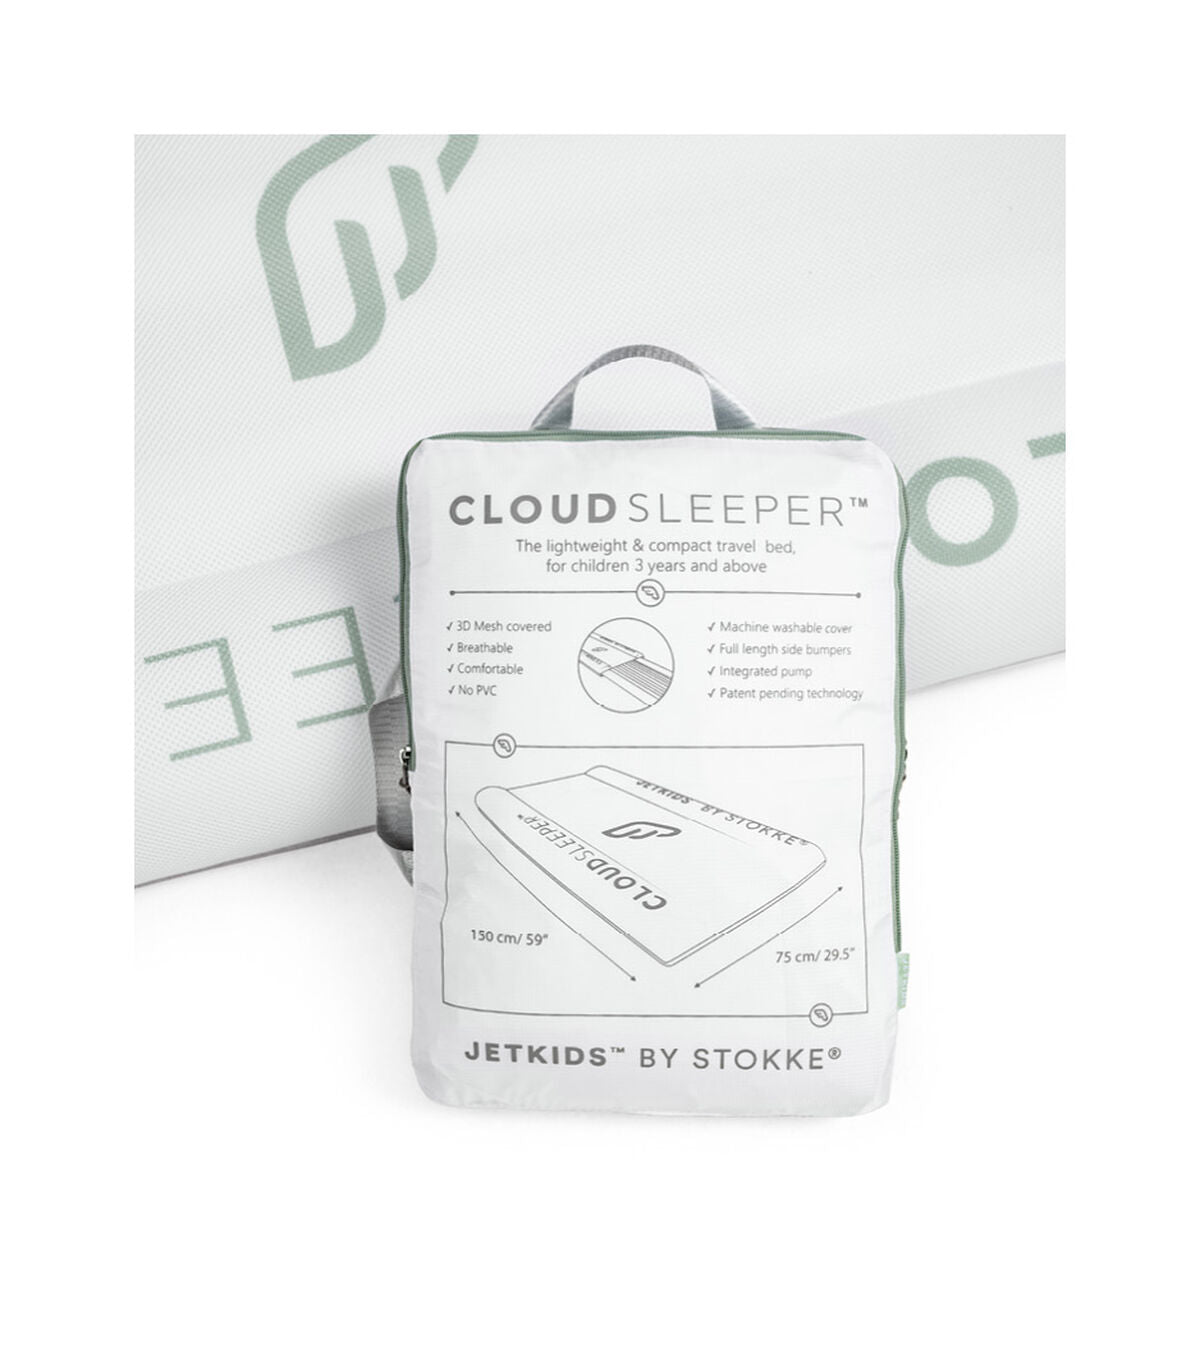 Colchon Inflable CloudSleeper™ JetKids de Stokke®